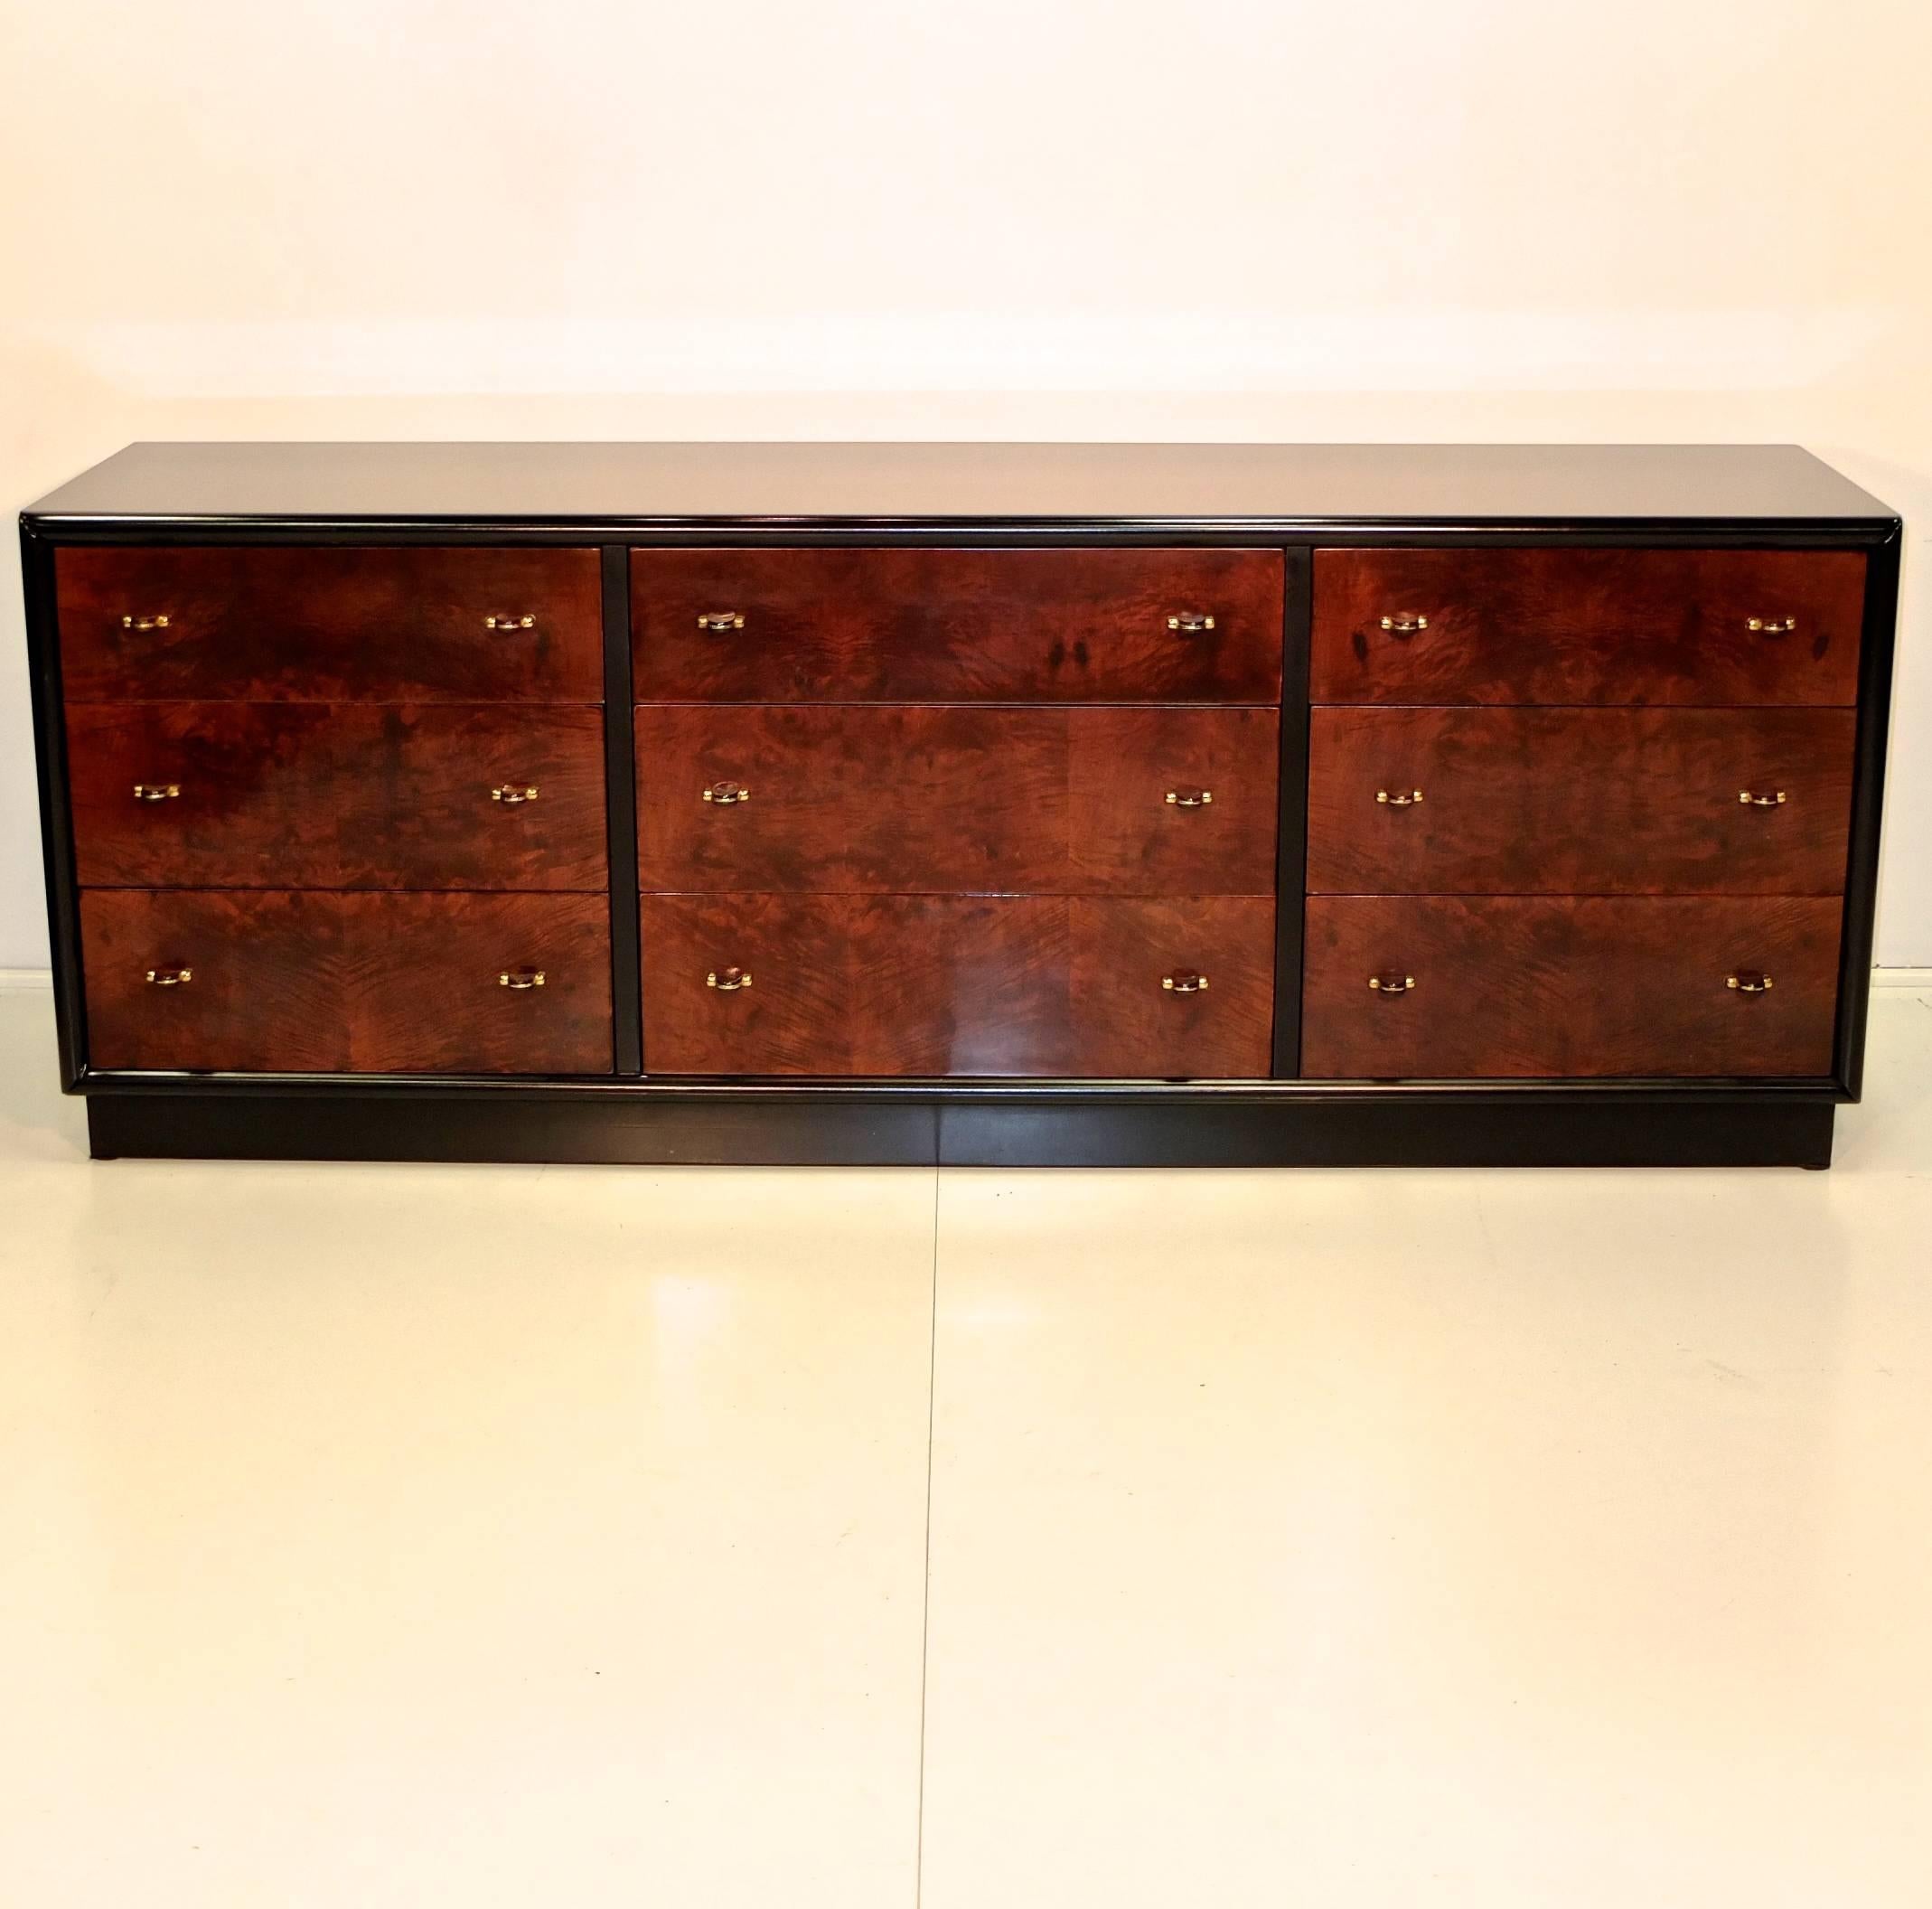 Nine-drawer long dresser by Henredon from their 